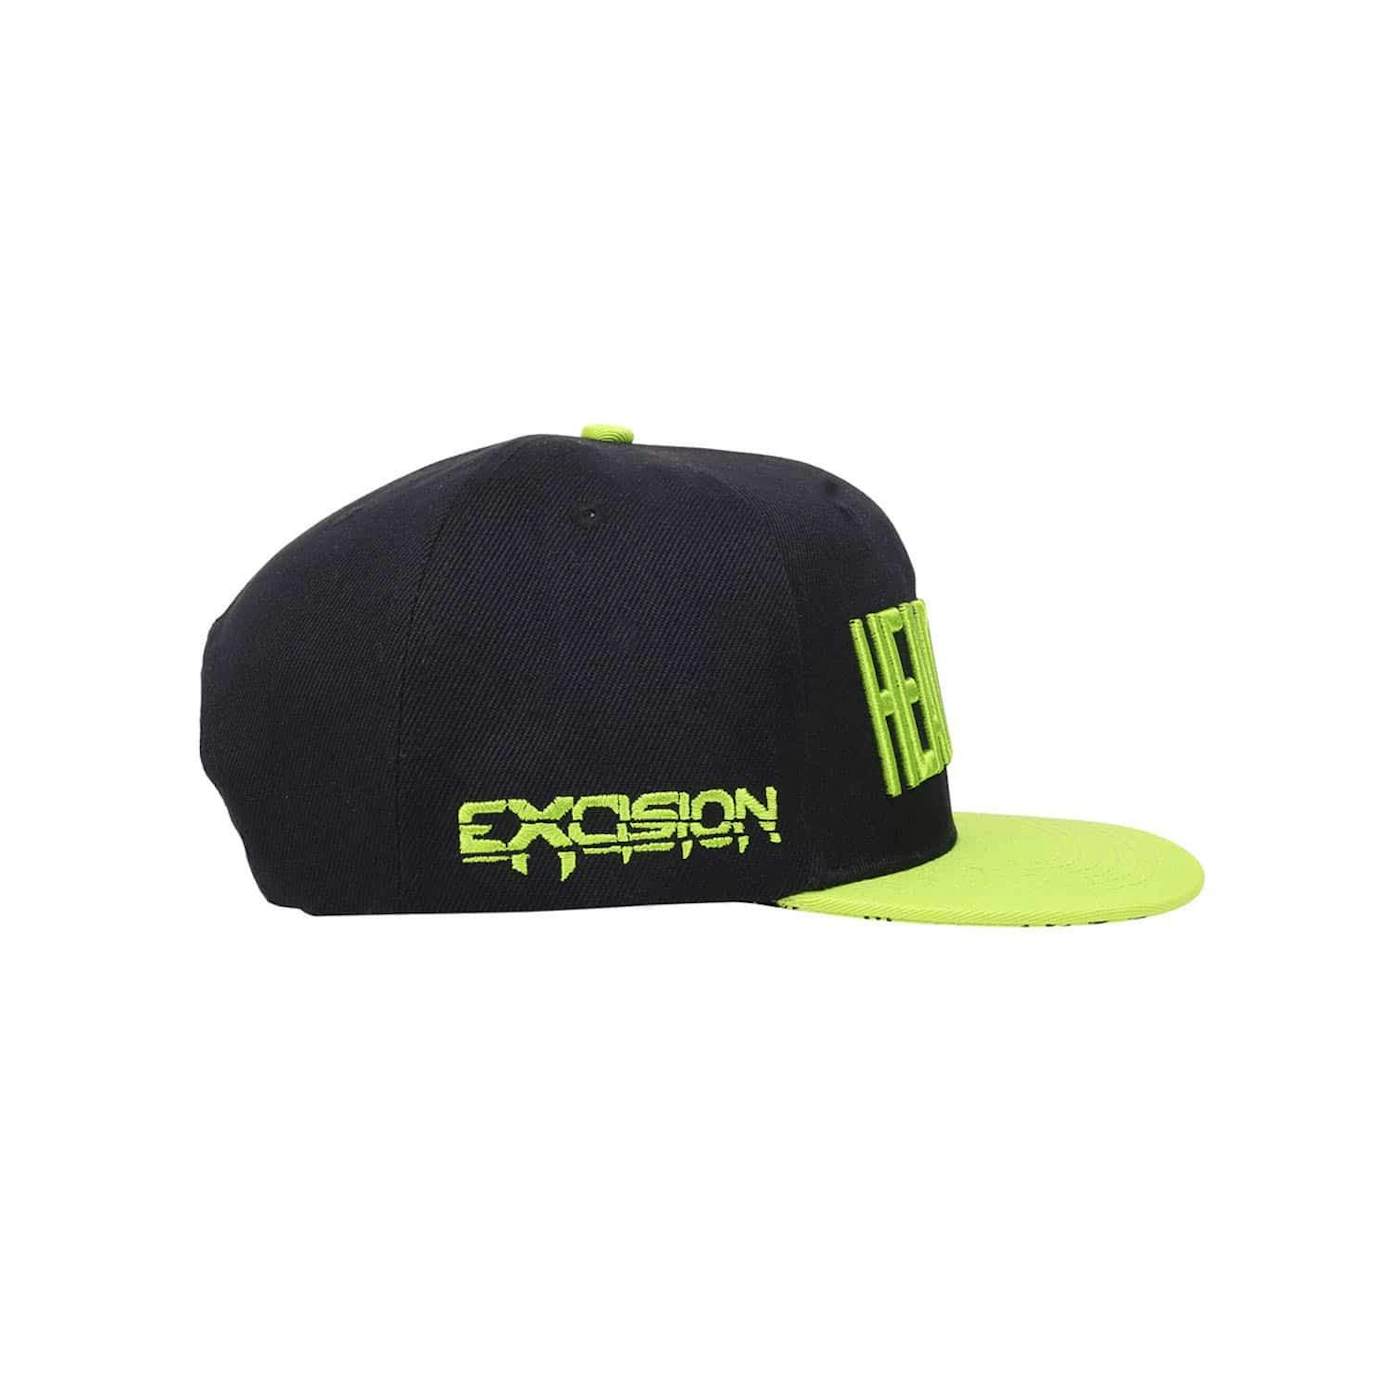 Excision 'Headbanger' Snapback - Black/Neon Green